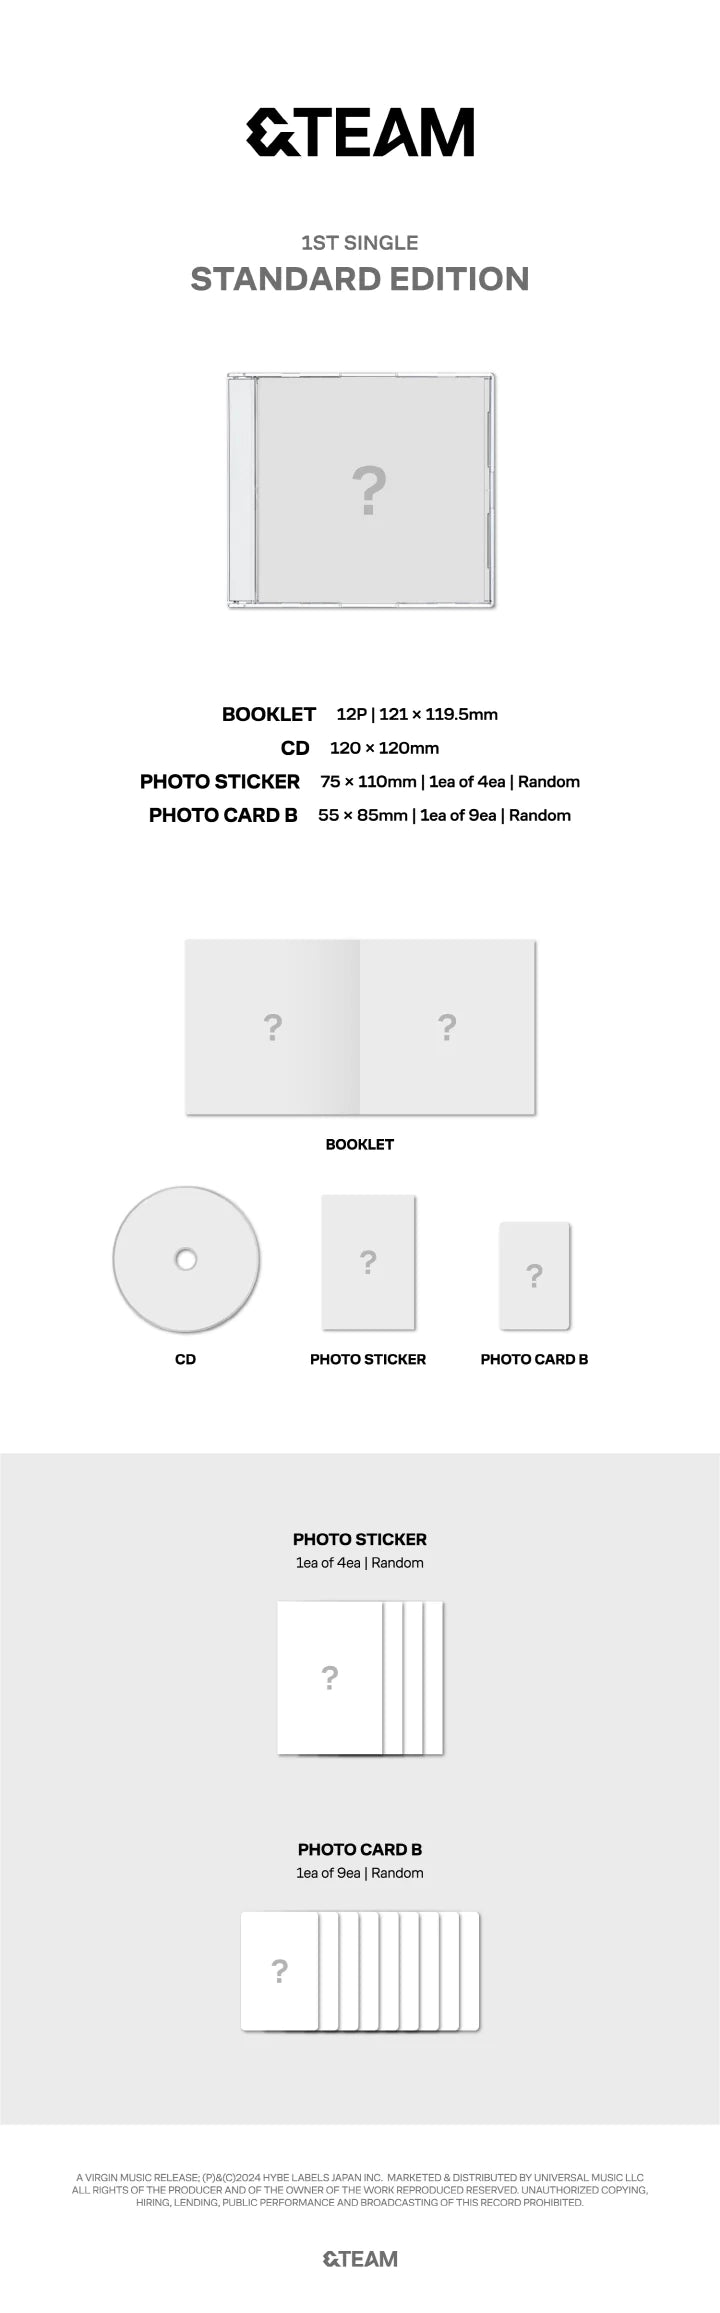 &TEAM - 1st Single Album (Standard Edition) Infographic